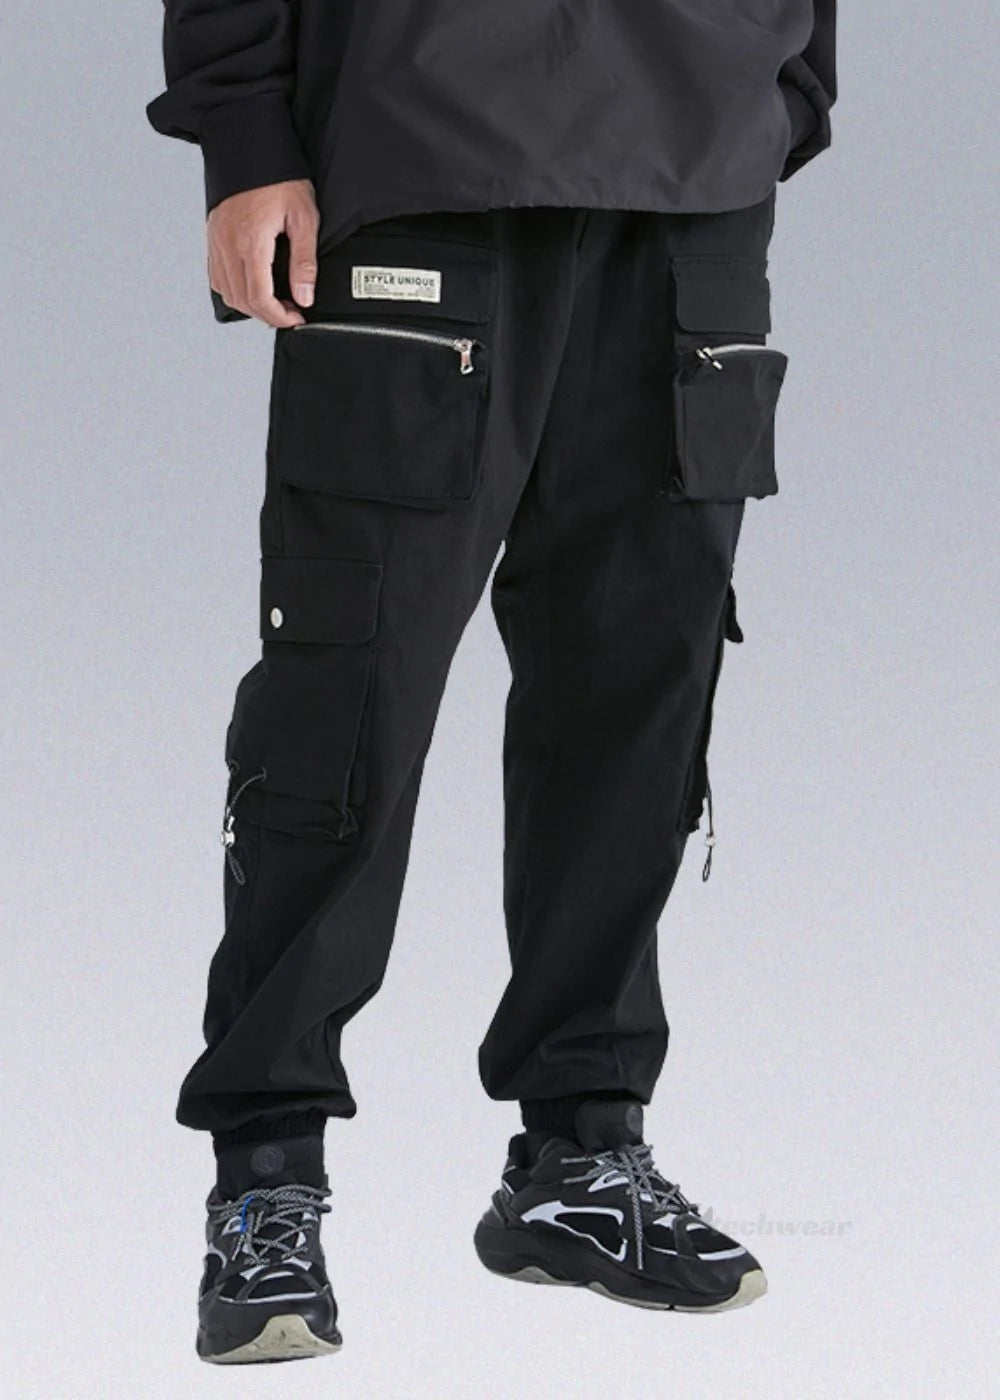 TW Frock Cargo Pants - Shop Darkwear Pants - X